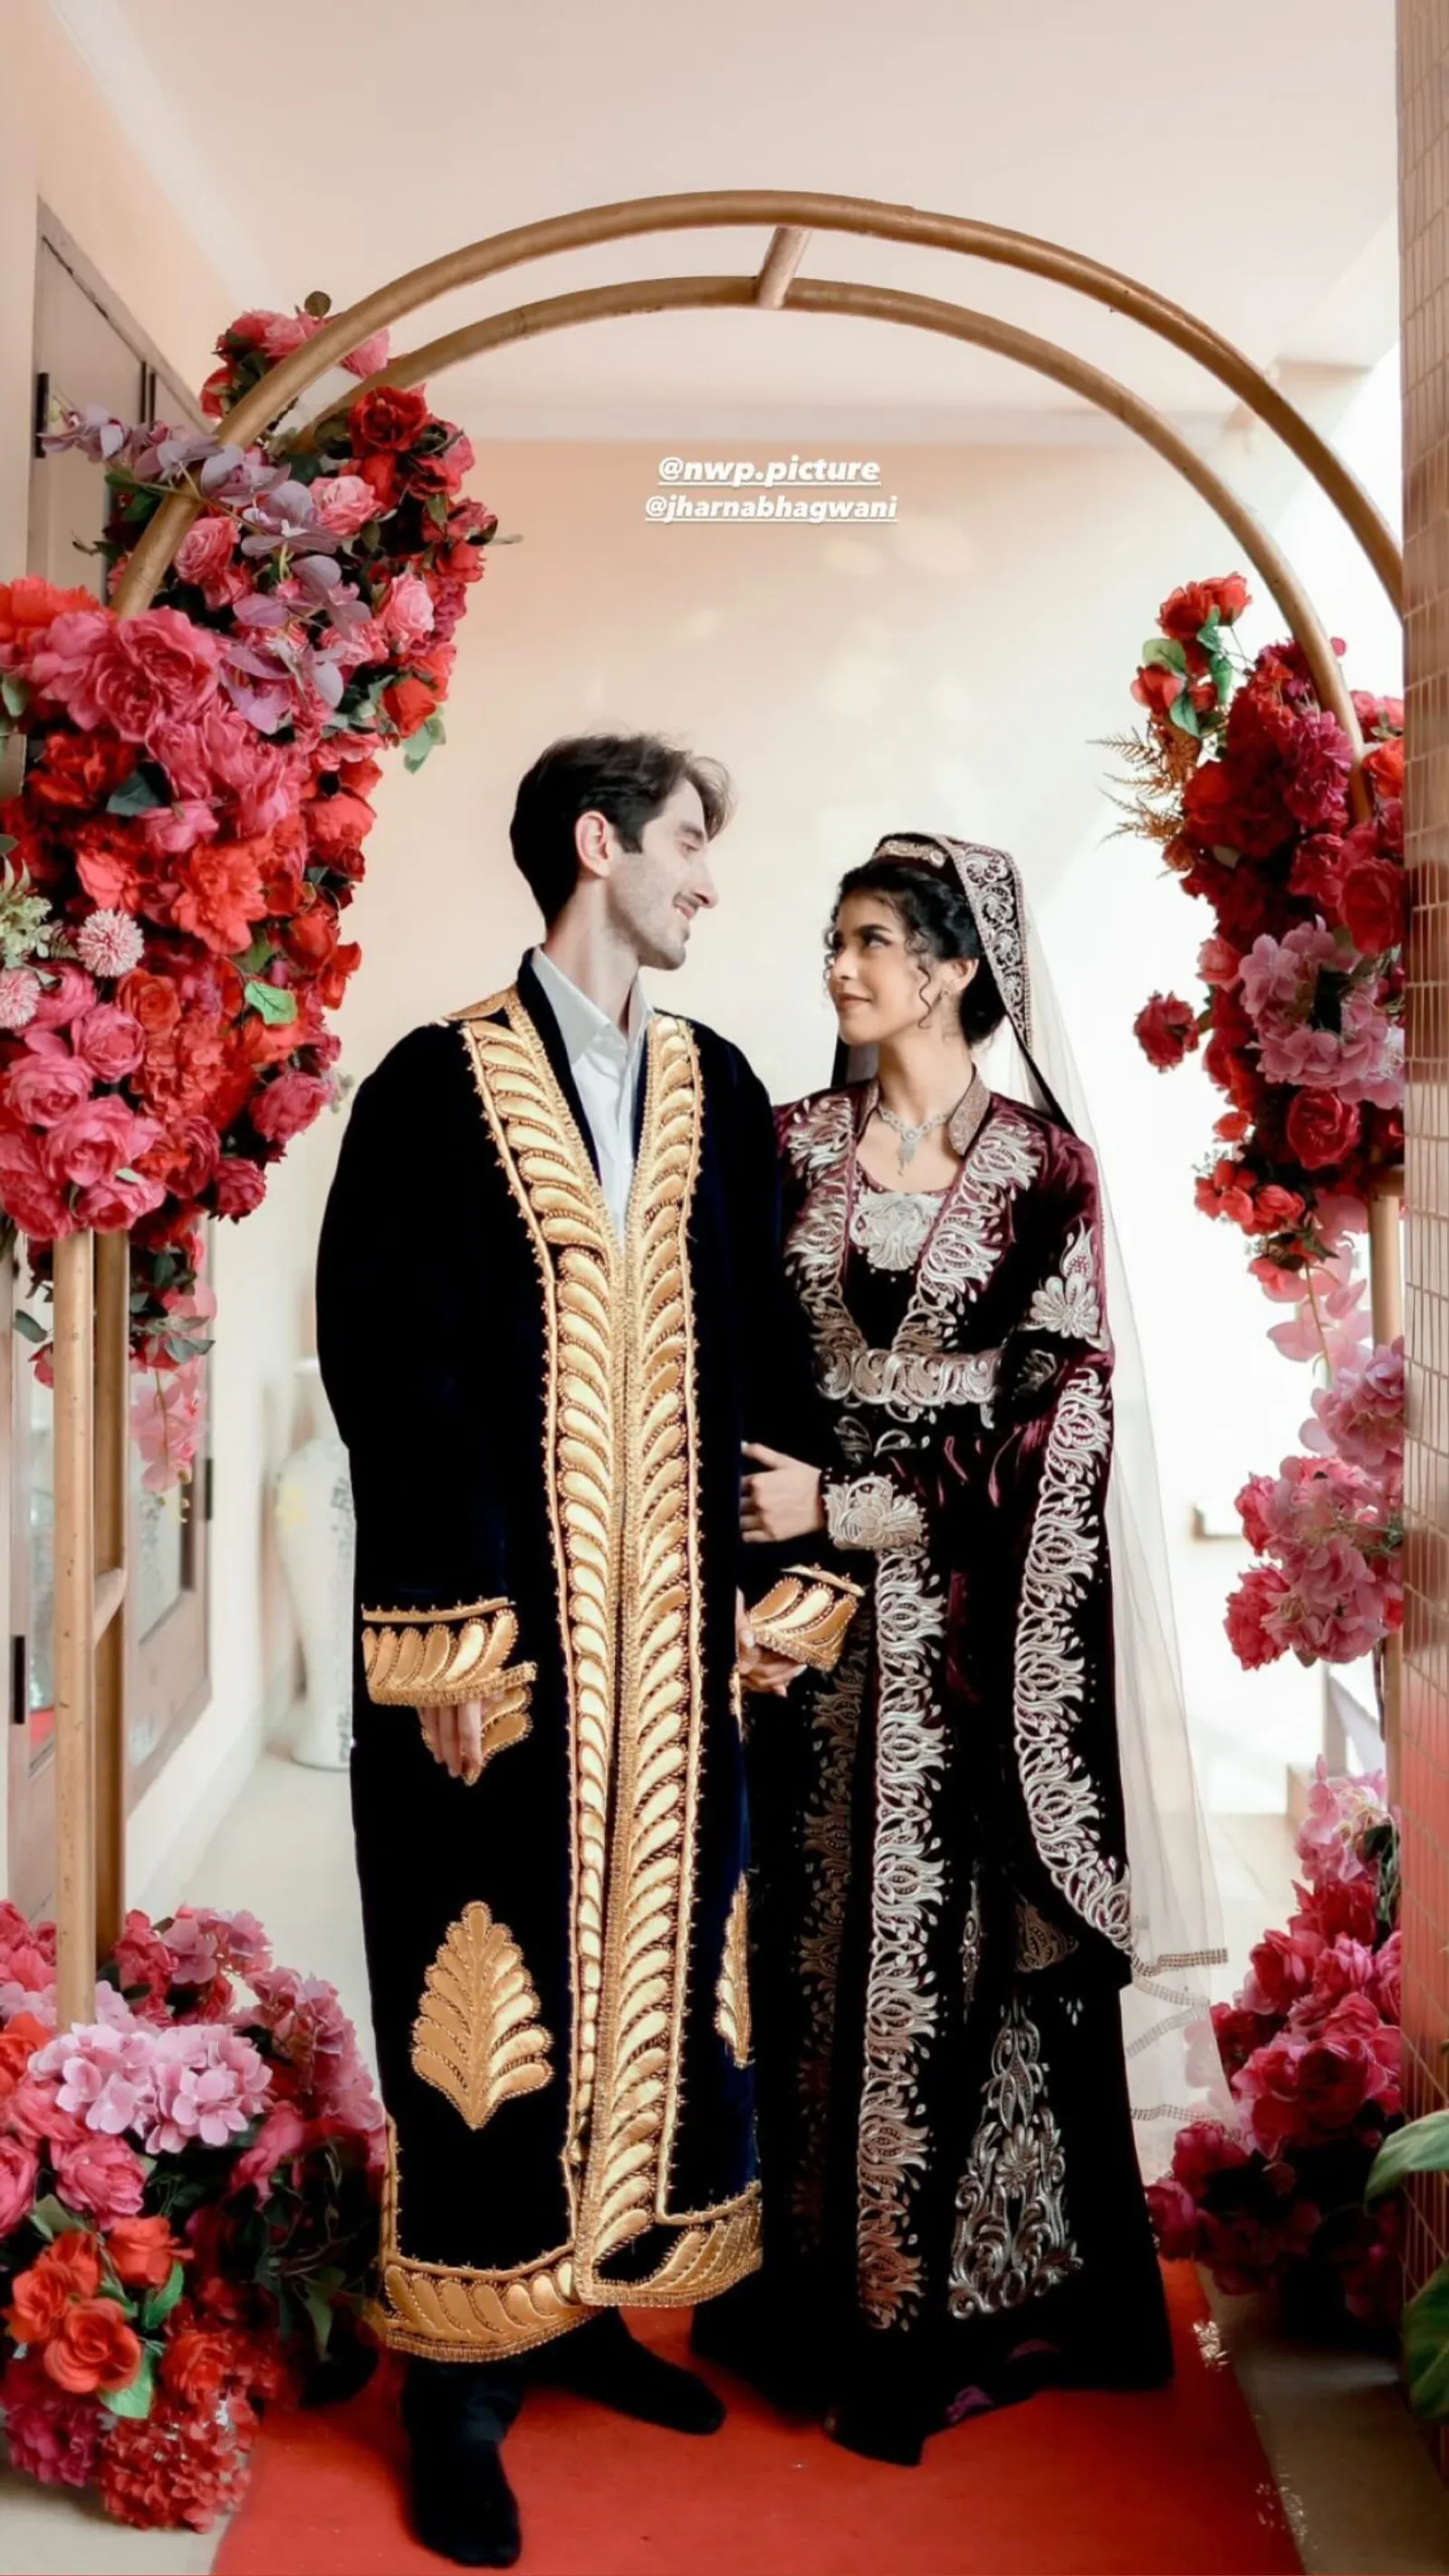 7 Potret Pre-Wedding dan Bridal Shower Selebgram Jharna Bhagwani